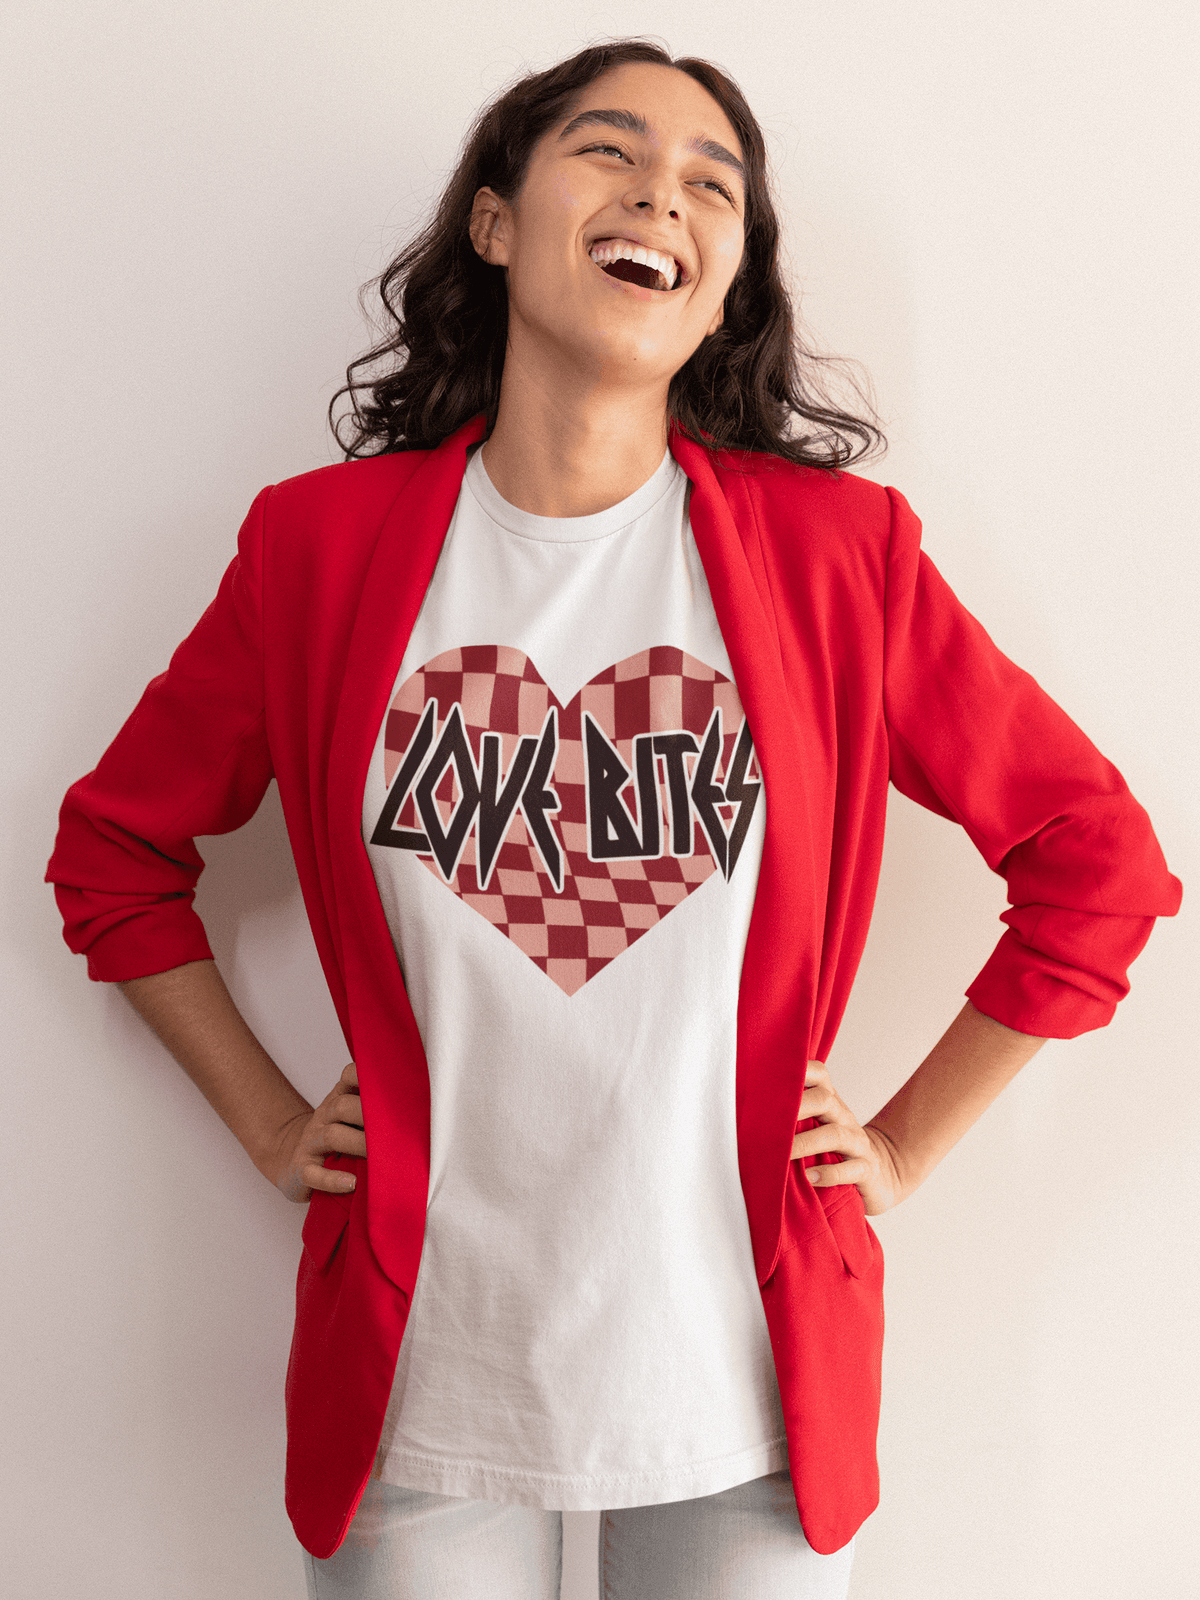 LOVE BITES VALENTINE T-shirt - StylinArt